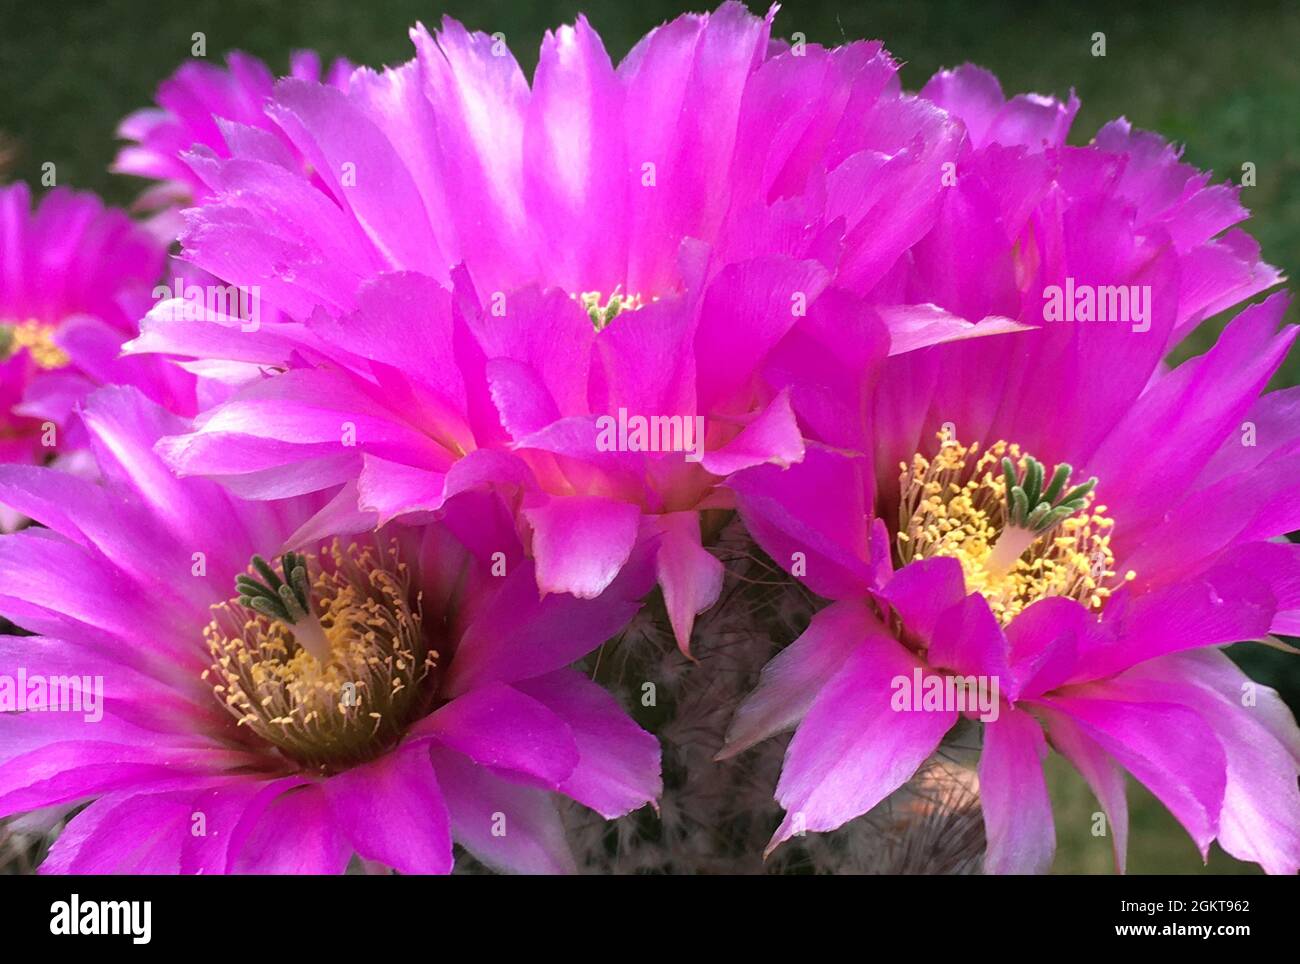 Flowering cactus Echinocereus reichenbachii from Texas - United States. Stock Photo